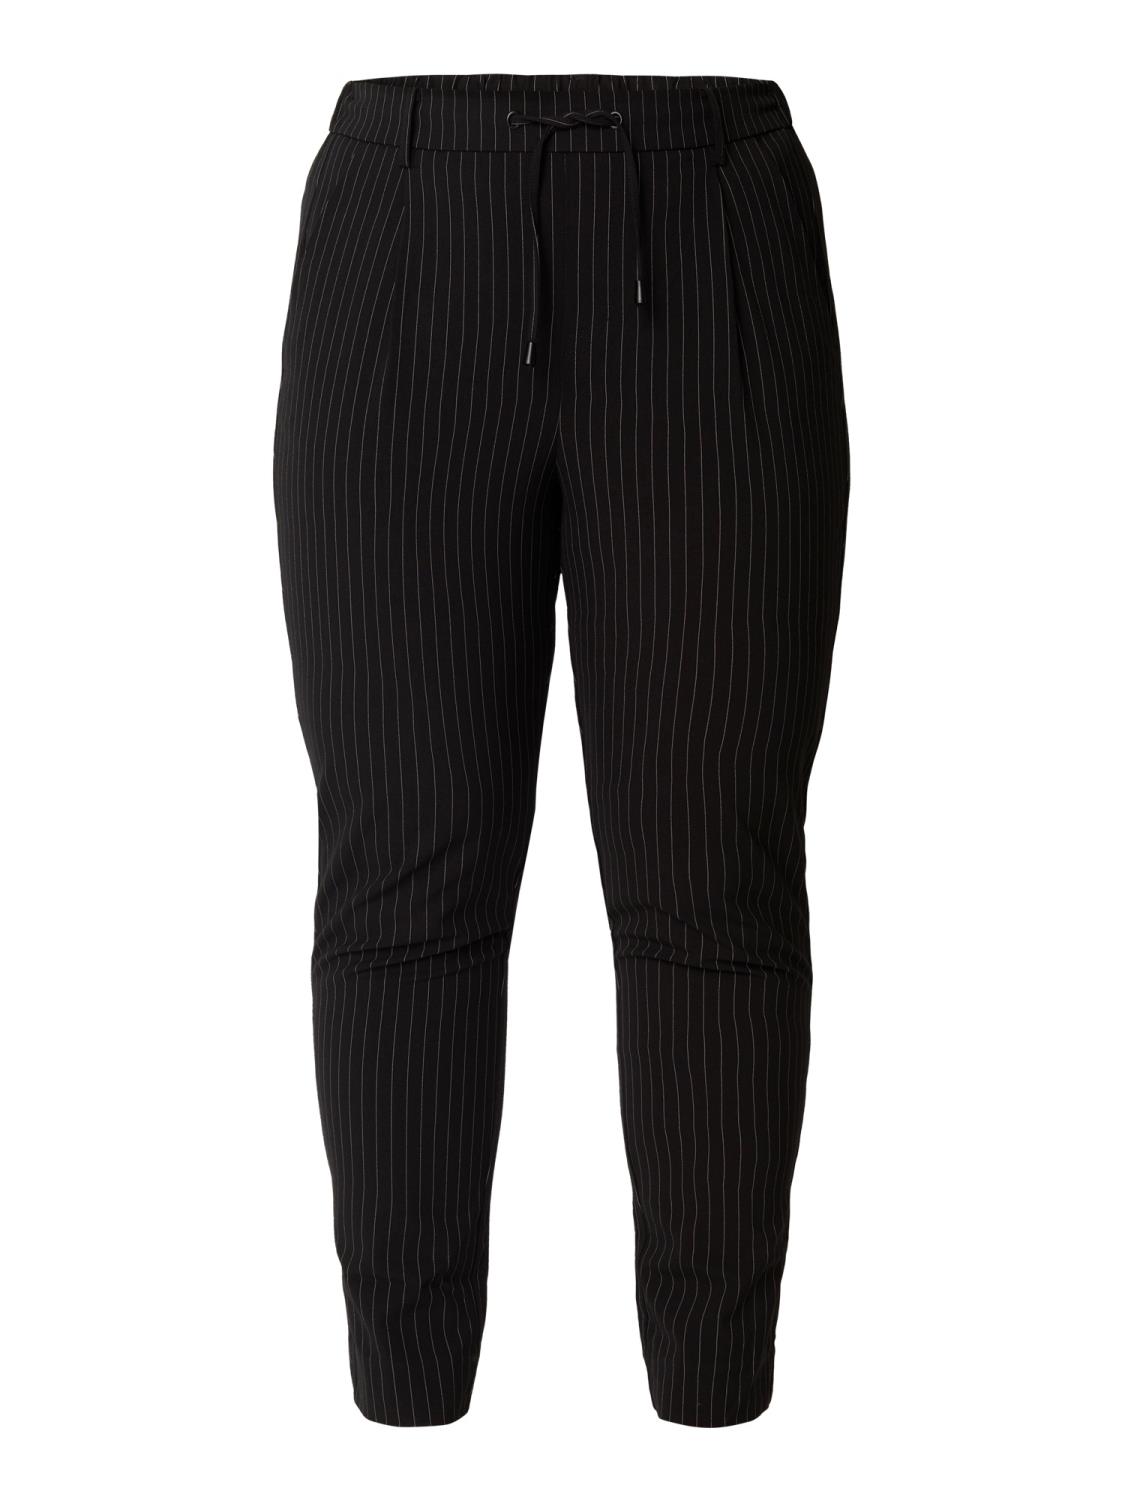 Ciso Loose Pants, stripet bukse, sort/hvit